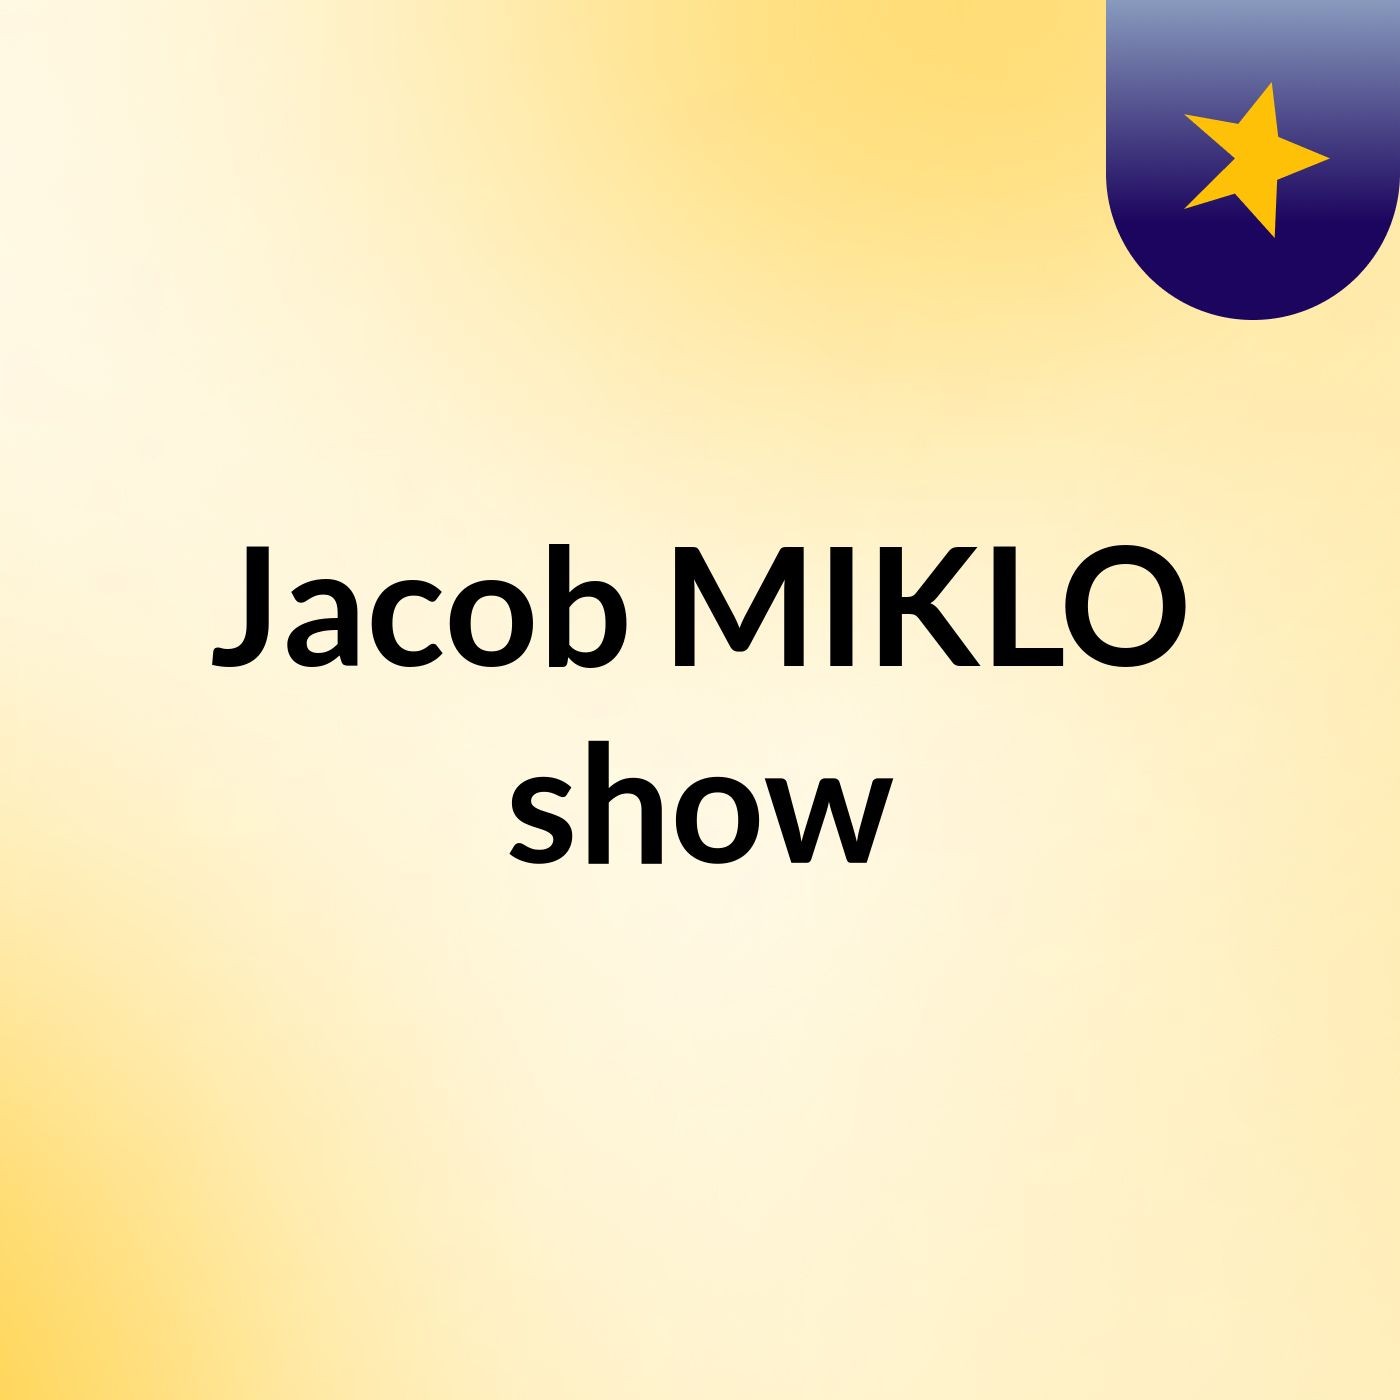 Jacob MIKLO show